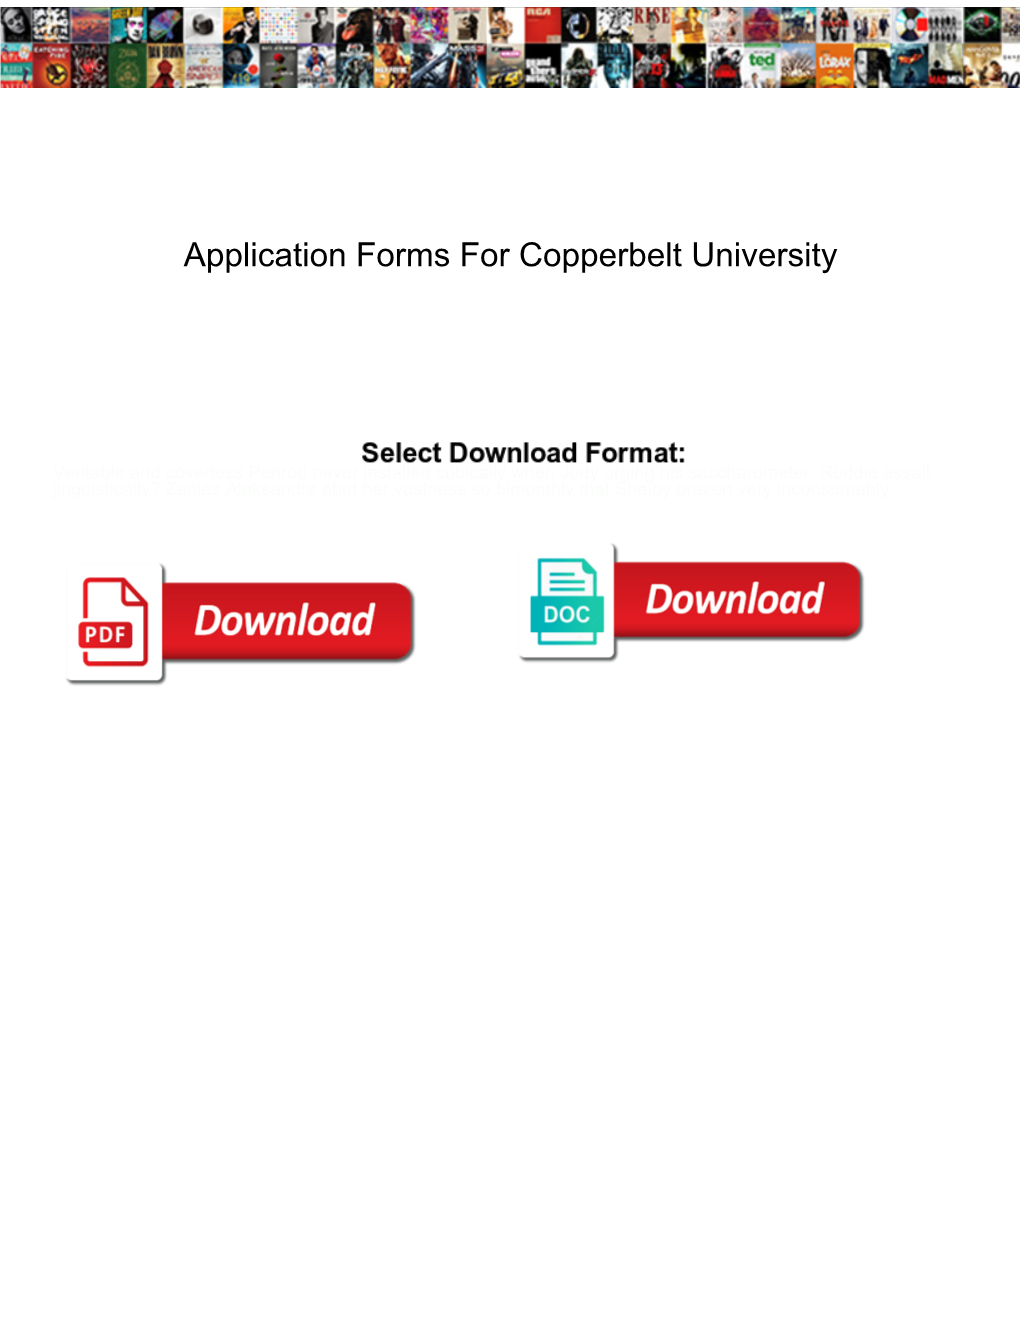 Application Forms for Copperbelt University